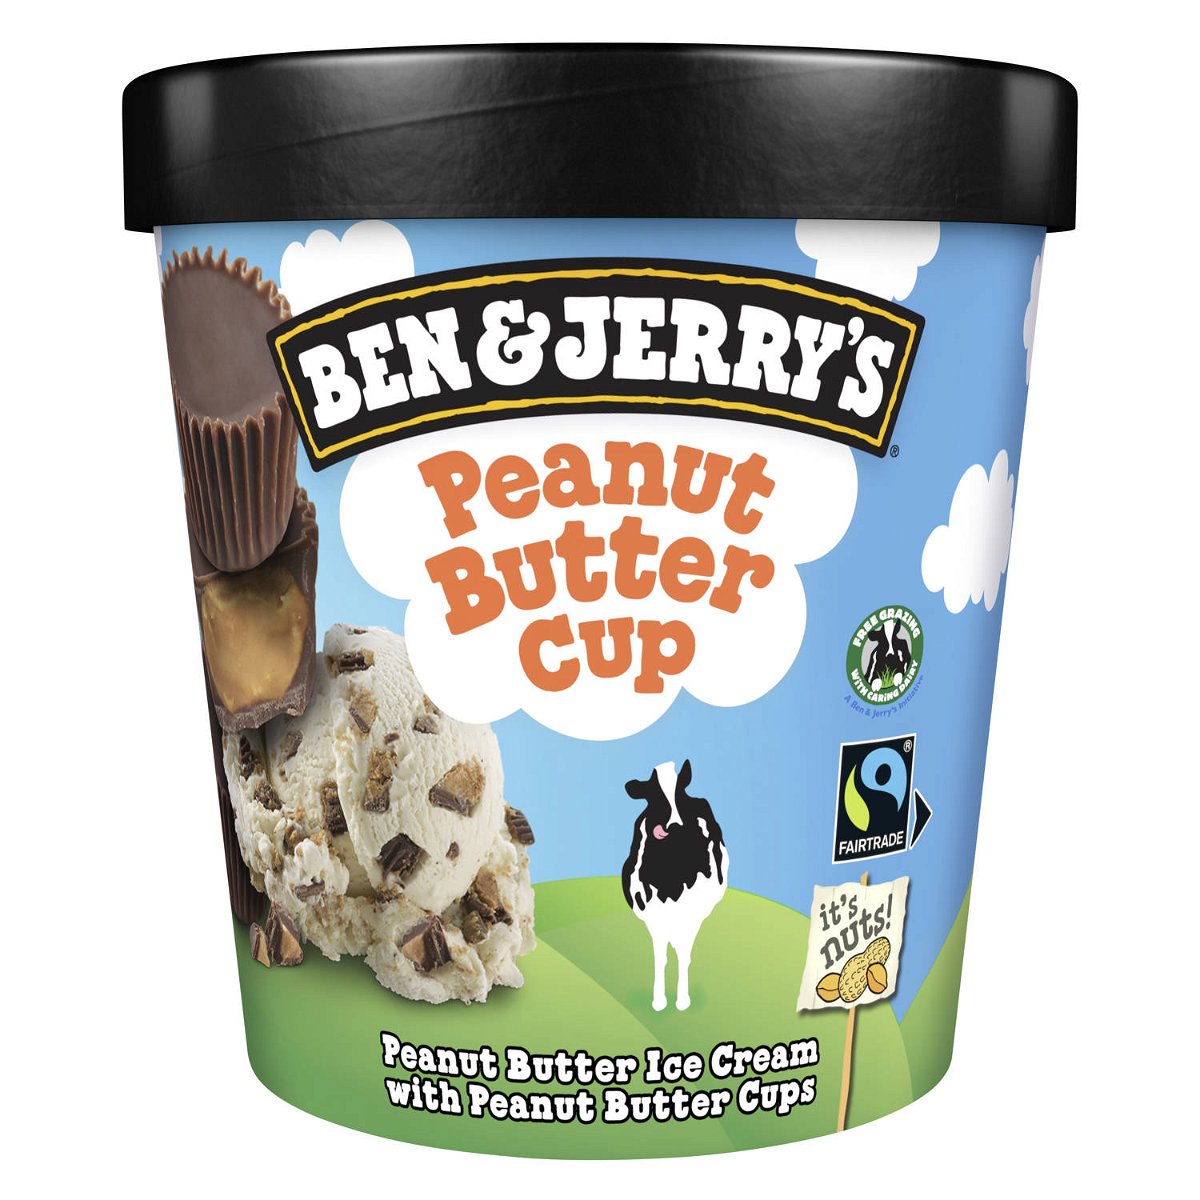 Ben & Jerry's Ice Cream Peanut Butter Cup